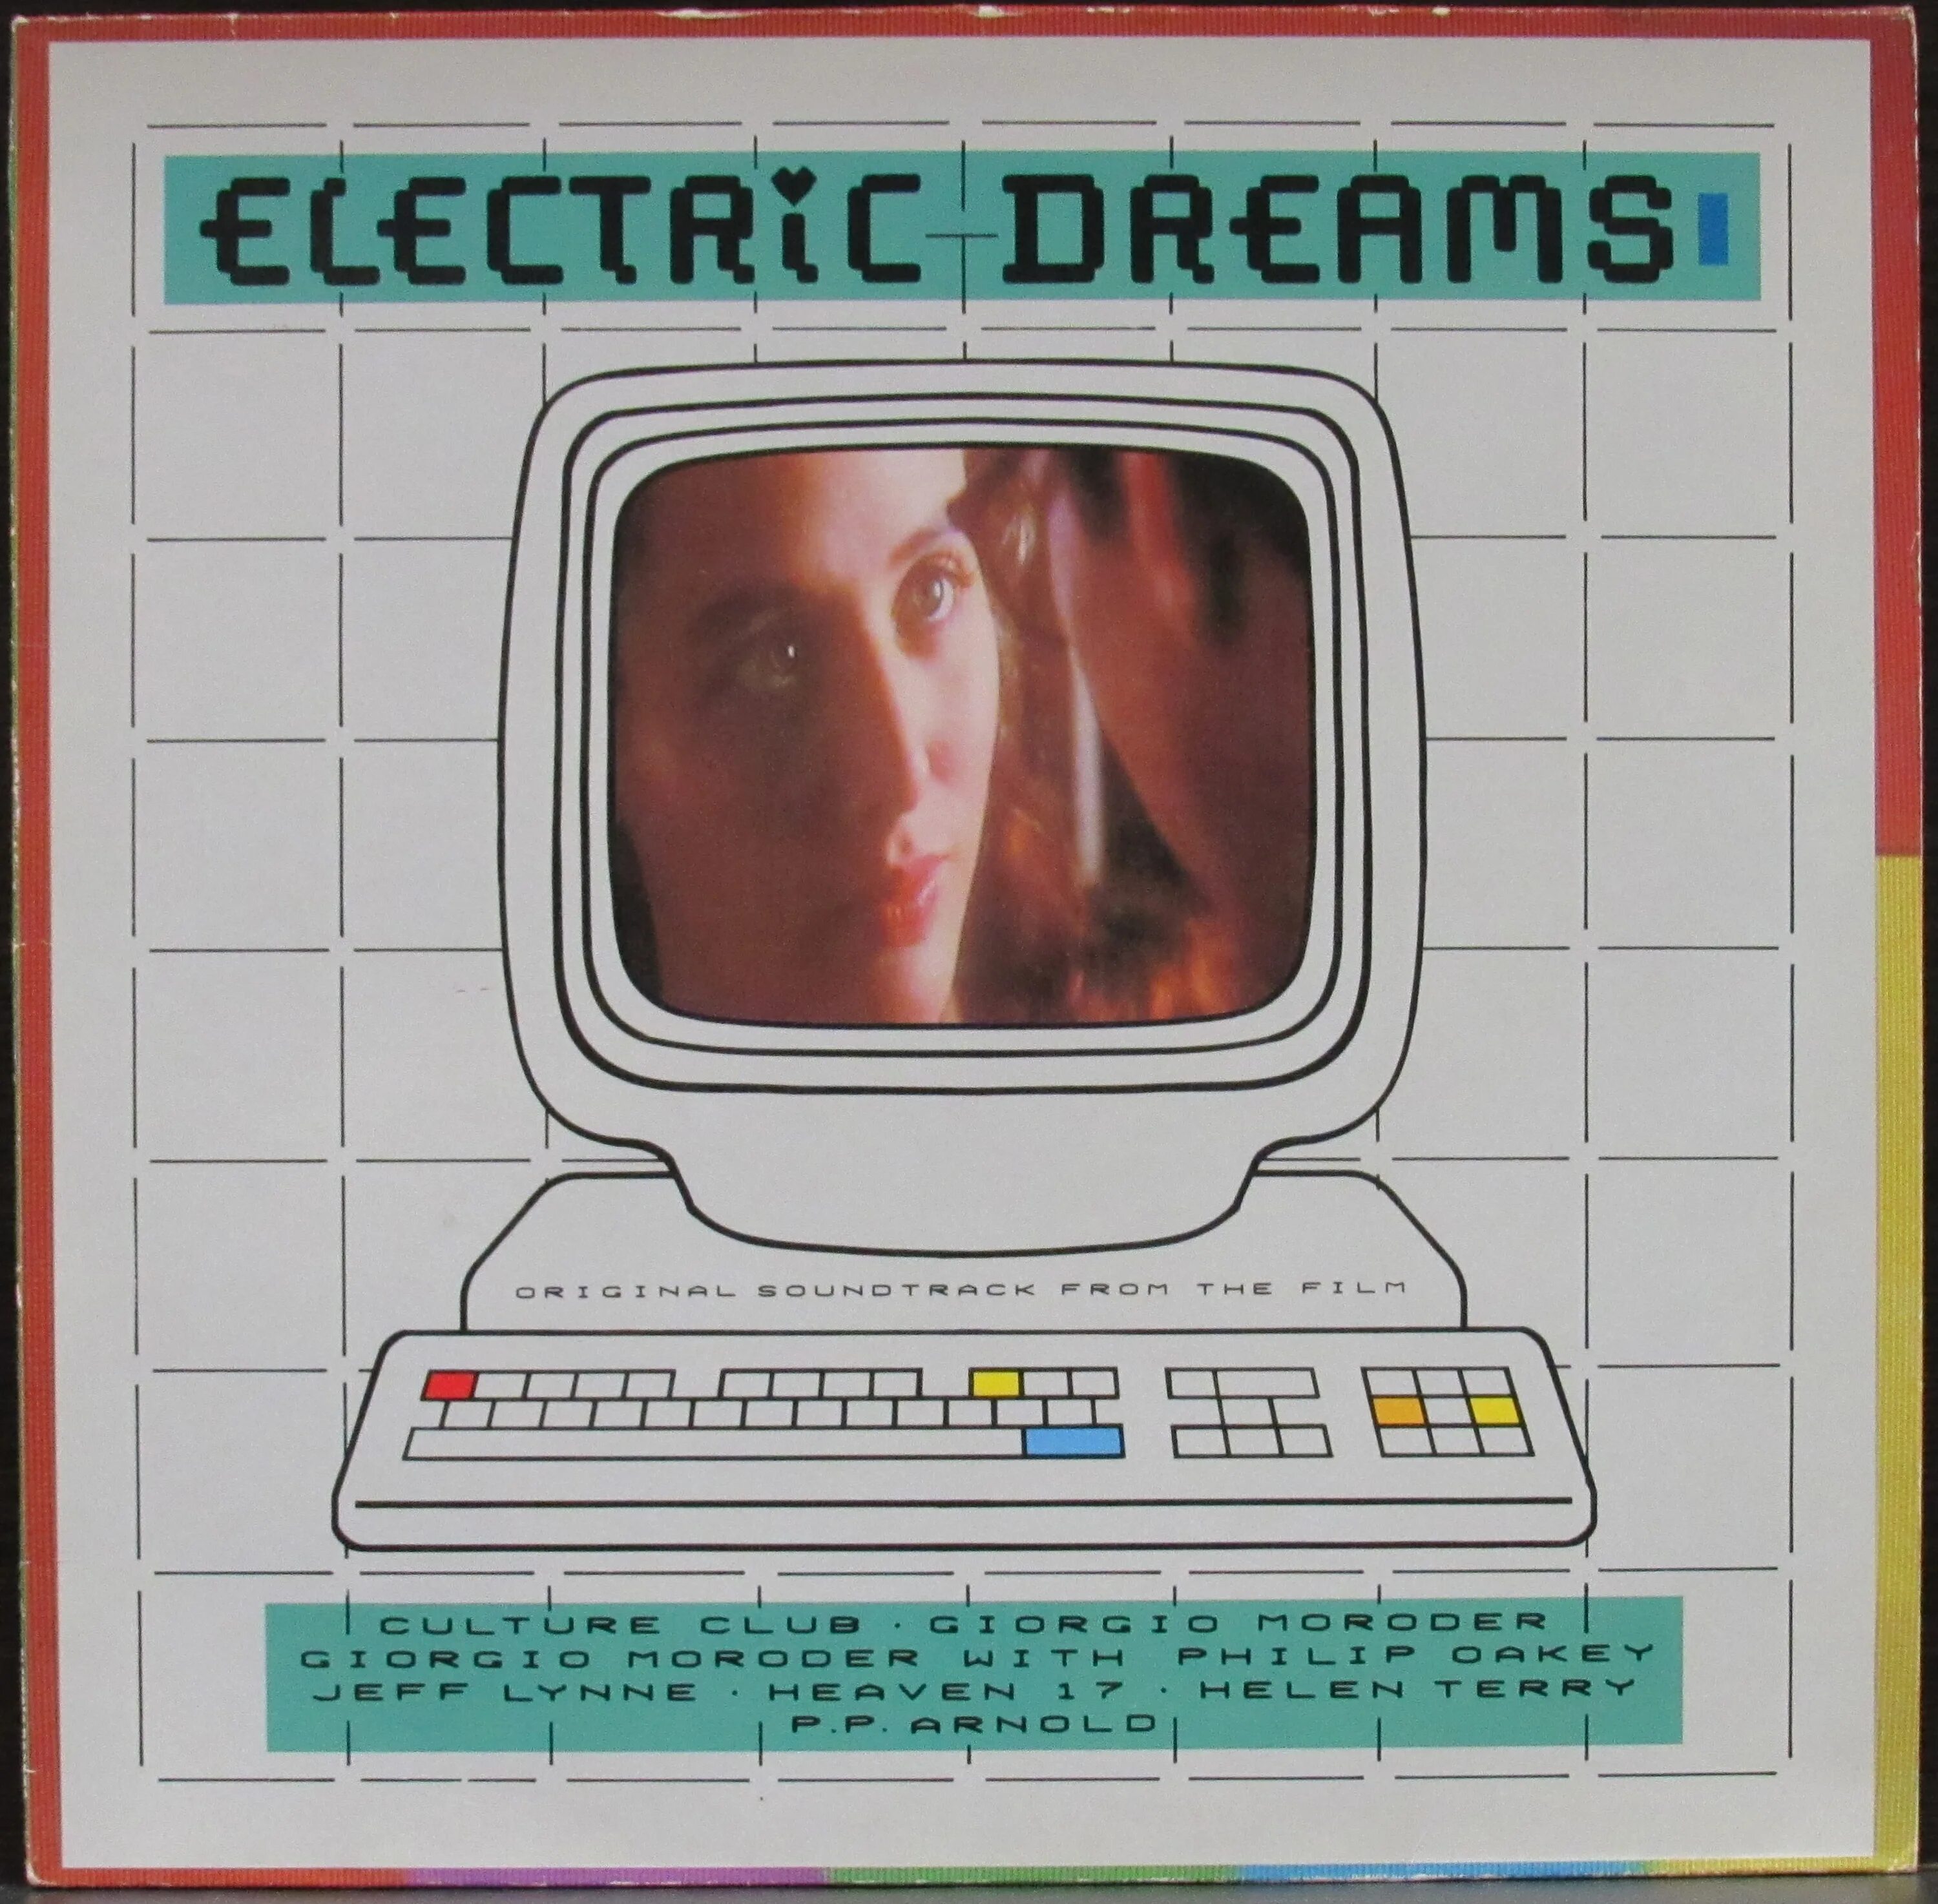 Dream soundtrack. Giorgio Moroder - Electric Dreams обложка. Electric Dreams 1984. Электрические грезы" (Electric Dreams), 1984. Electric Dreams 1984 Music.